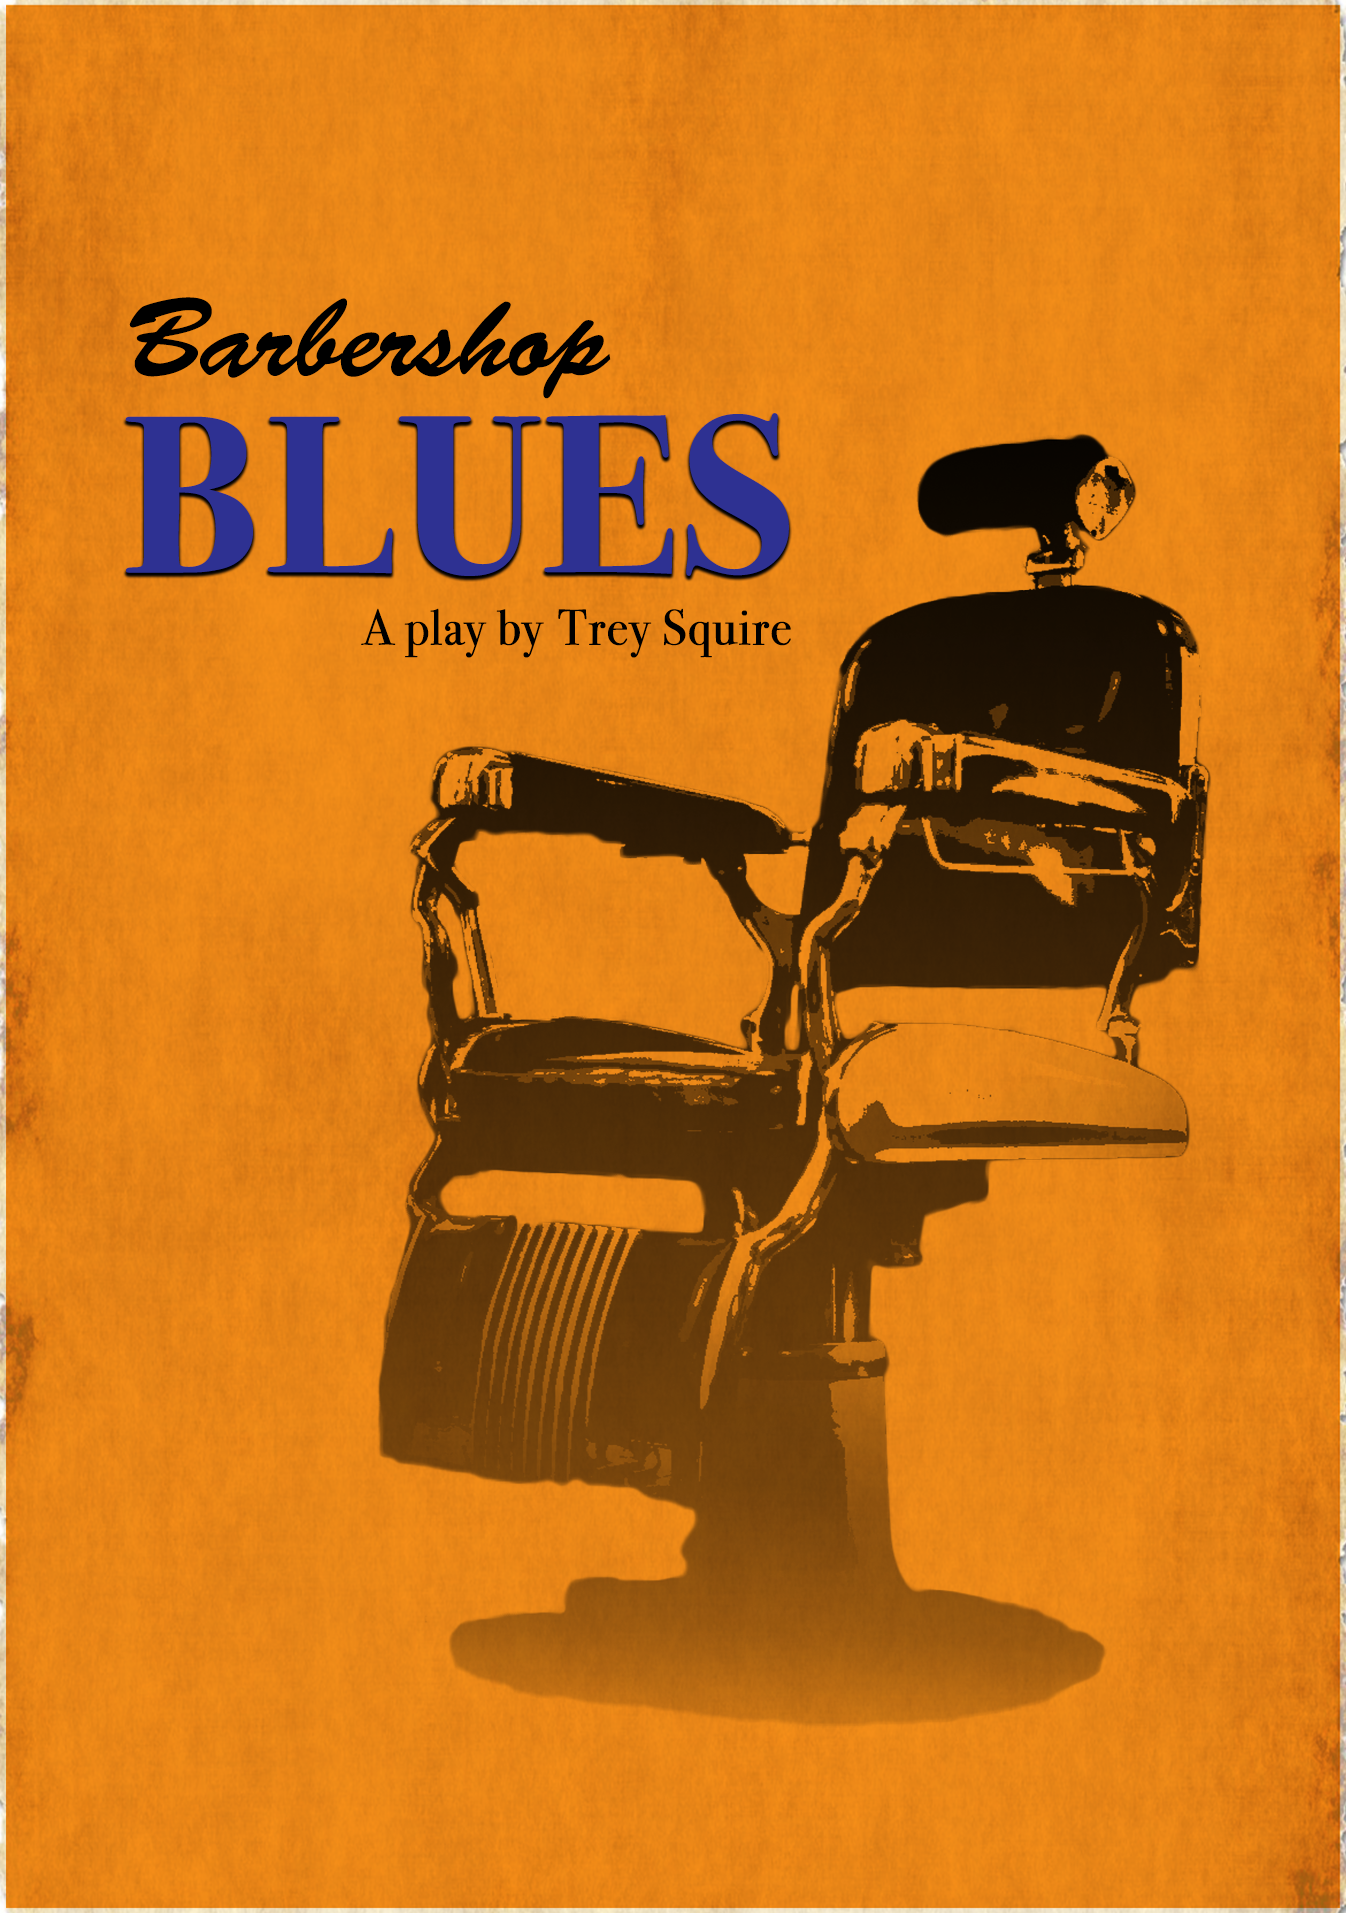 Barbershop Blues